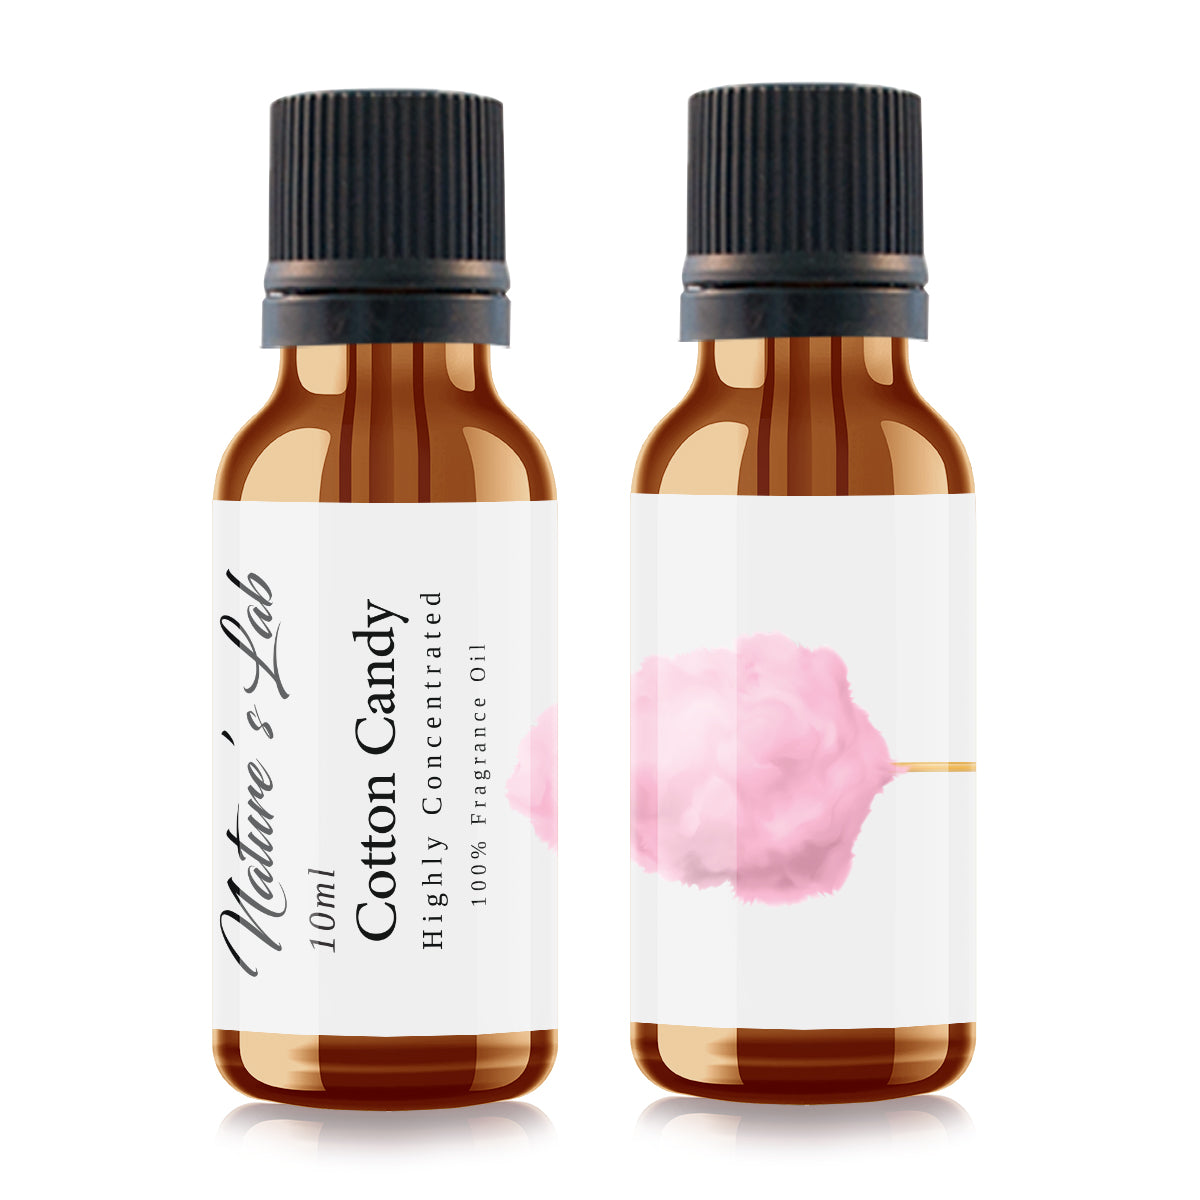 Cotton Candy Fragrance Oil 10 mL / .33 Oz Aromatic Premium Grade